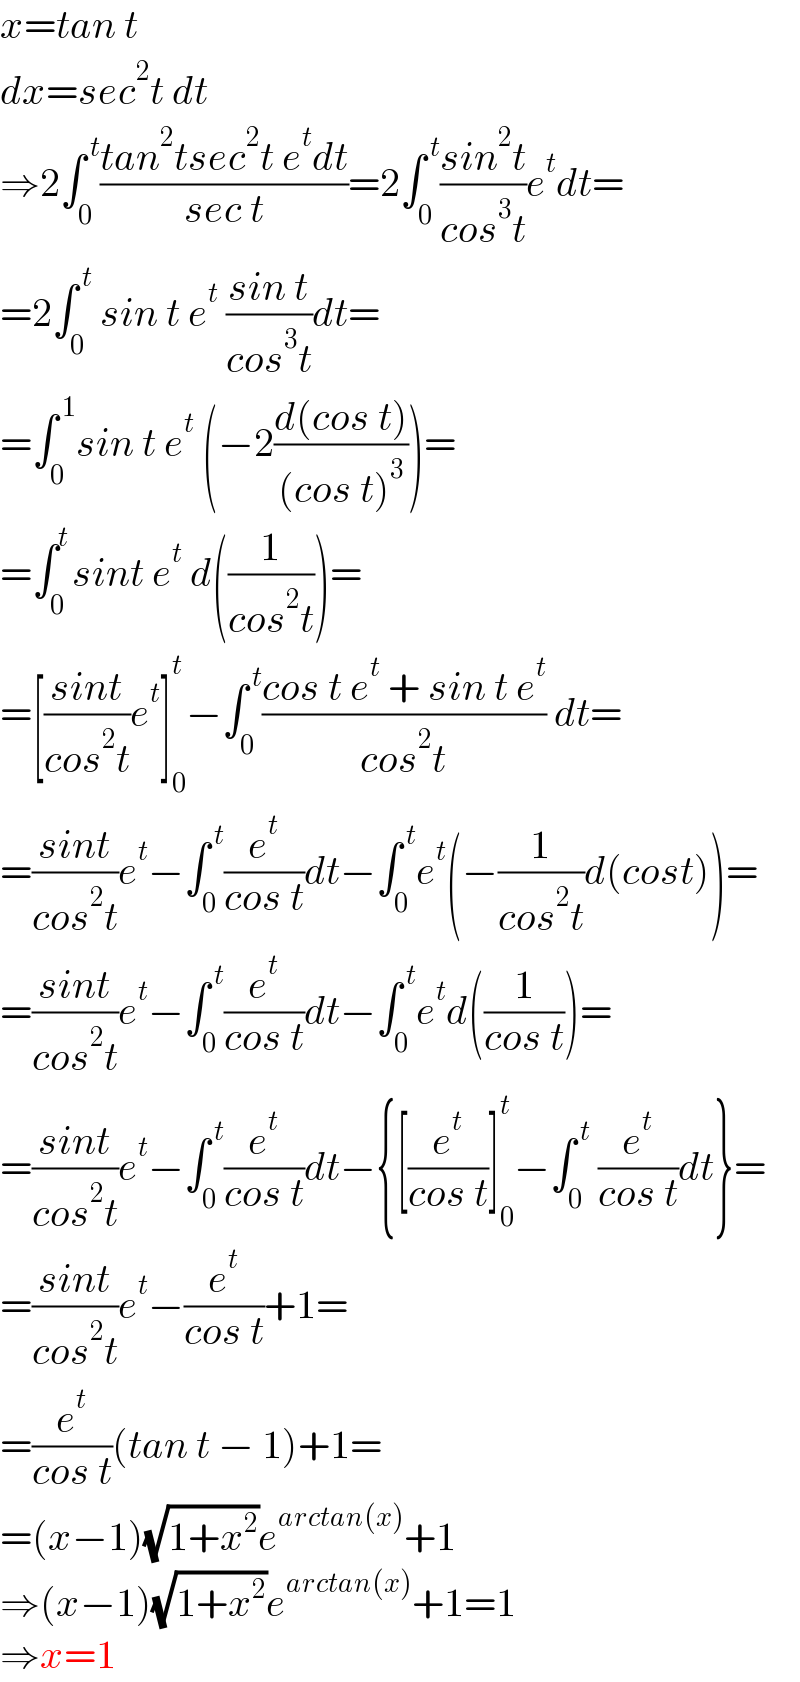 x=tan t  dx=sec^2 t dt  ⇒2∫_0 ^( t) ((tan^2 tsec^2 t e^t dt)/(sec t))=2∫_0 ^( t) ((sin^2 t)/(cos^3 t))e^t dt=  =2∫_0 ^( t)  sin t e^t  ((sin t)/(cos^3 t))dt=  =∫_0 ^( 1) sin t e^t  (−2((d(cos t))/((cos t)^3 )))=  =∫_0 ^t sint e^t  d((1/(cos^2 t)))=  =[((sint)/(cos^2 t))e^t ]_0 ^t −∫_0 ^( t) ((cos t e^t  + sin t e^t )/(cos^2 t)) dt=  =((sint)/(cos^2 t))e^t −∫_0 ^( t) (e^t /(cos t))dt−∫_0 ^( t) e^t (−(1/(cos^2 t))d(cost))=  =((sint)/(cos^2 t))e^t −∫_0 ^( t) (e^t /(cos t))dt−∫_0 ^( t) e^t d((1/(cos t)))=  =((sint)/(cos^2 t))e^t −∫_0 ^( t) (e^t /(cos t))dt−{[(e^t /(cos t))]_0 ^t −∫_0 ^( t)  (e^t /(cos t))dt}=  =((sint)/(cos^2 t))e^t −(e^t /(cos t))+1=  =(e^t /(cos t))(tan t − 1)+1=  =(x−1)(√(1+x^2 ))e^(arctan(x)) +1  ⇒(x−1)(√(1+x^2 ))e^(arctan(x)) +1=1  ⇒x=1  